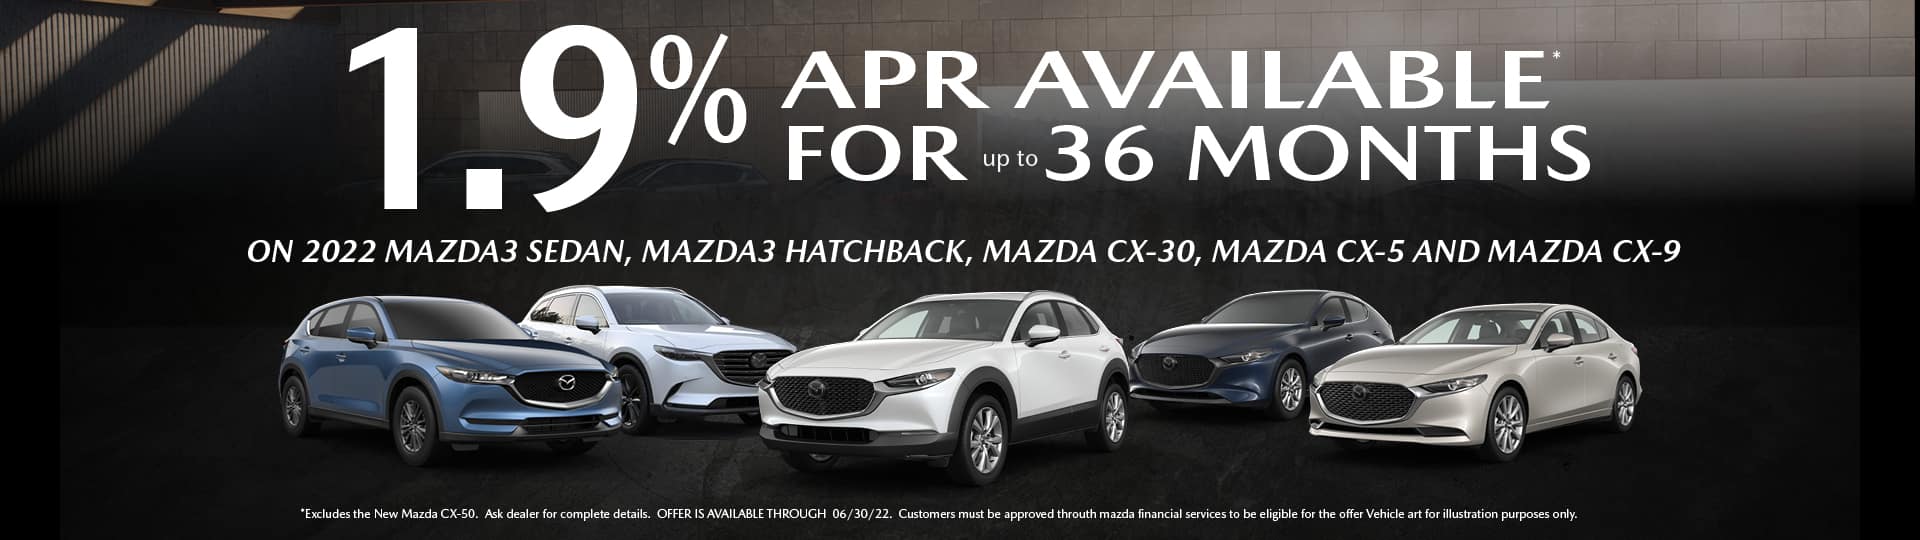 Locate your nearest mazda dealership. Welcome To Headquarter Mazda Mazda Dealer In Clermont